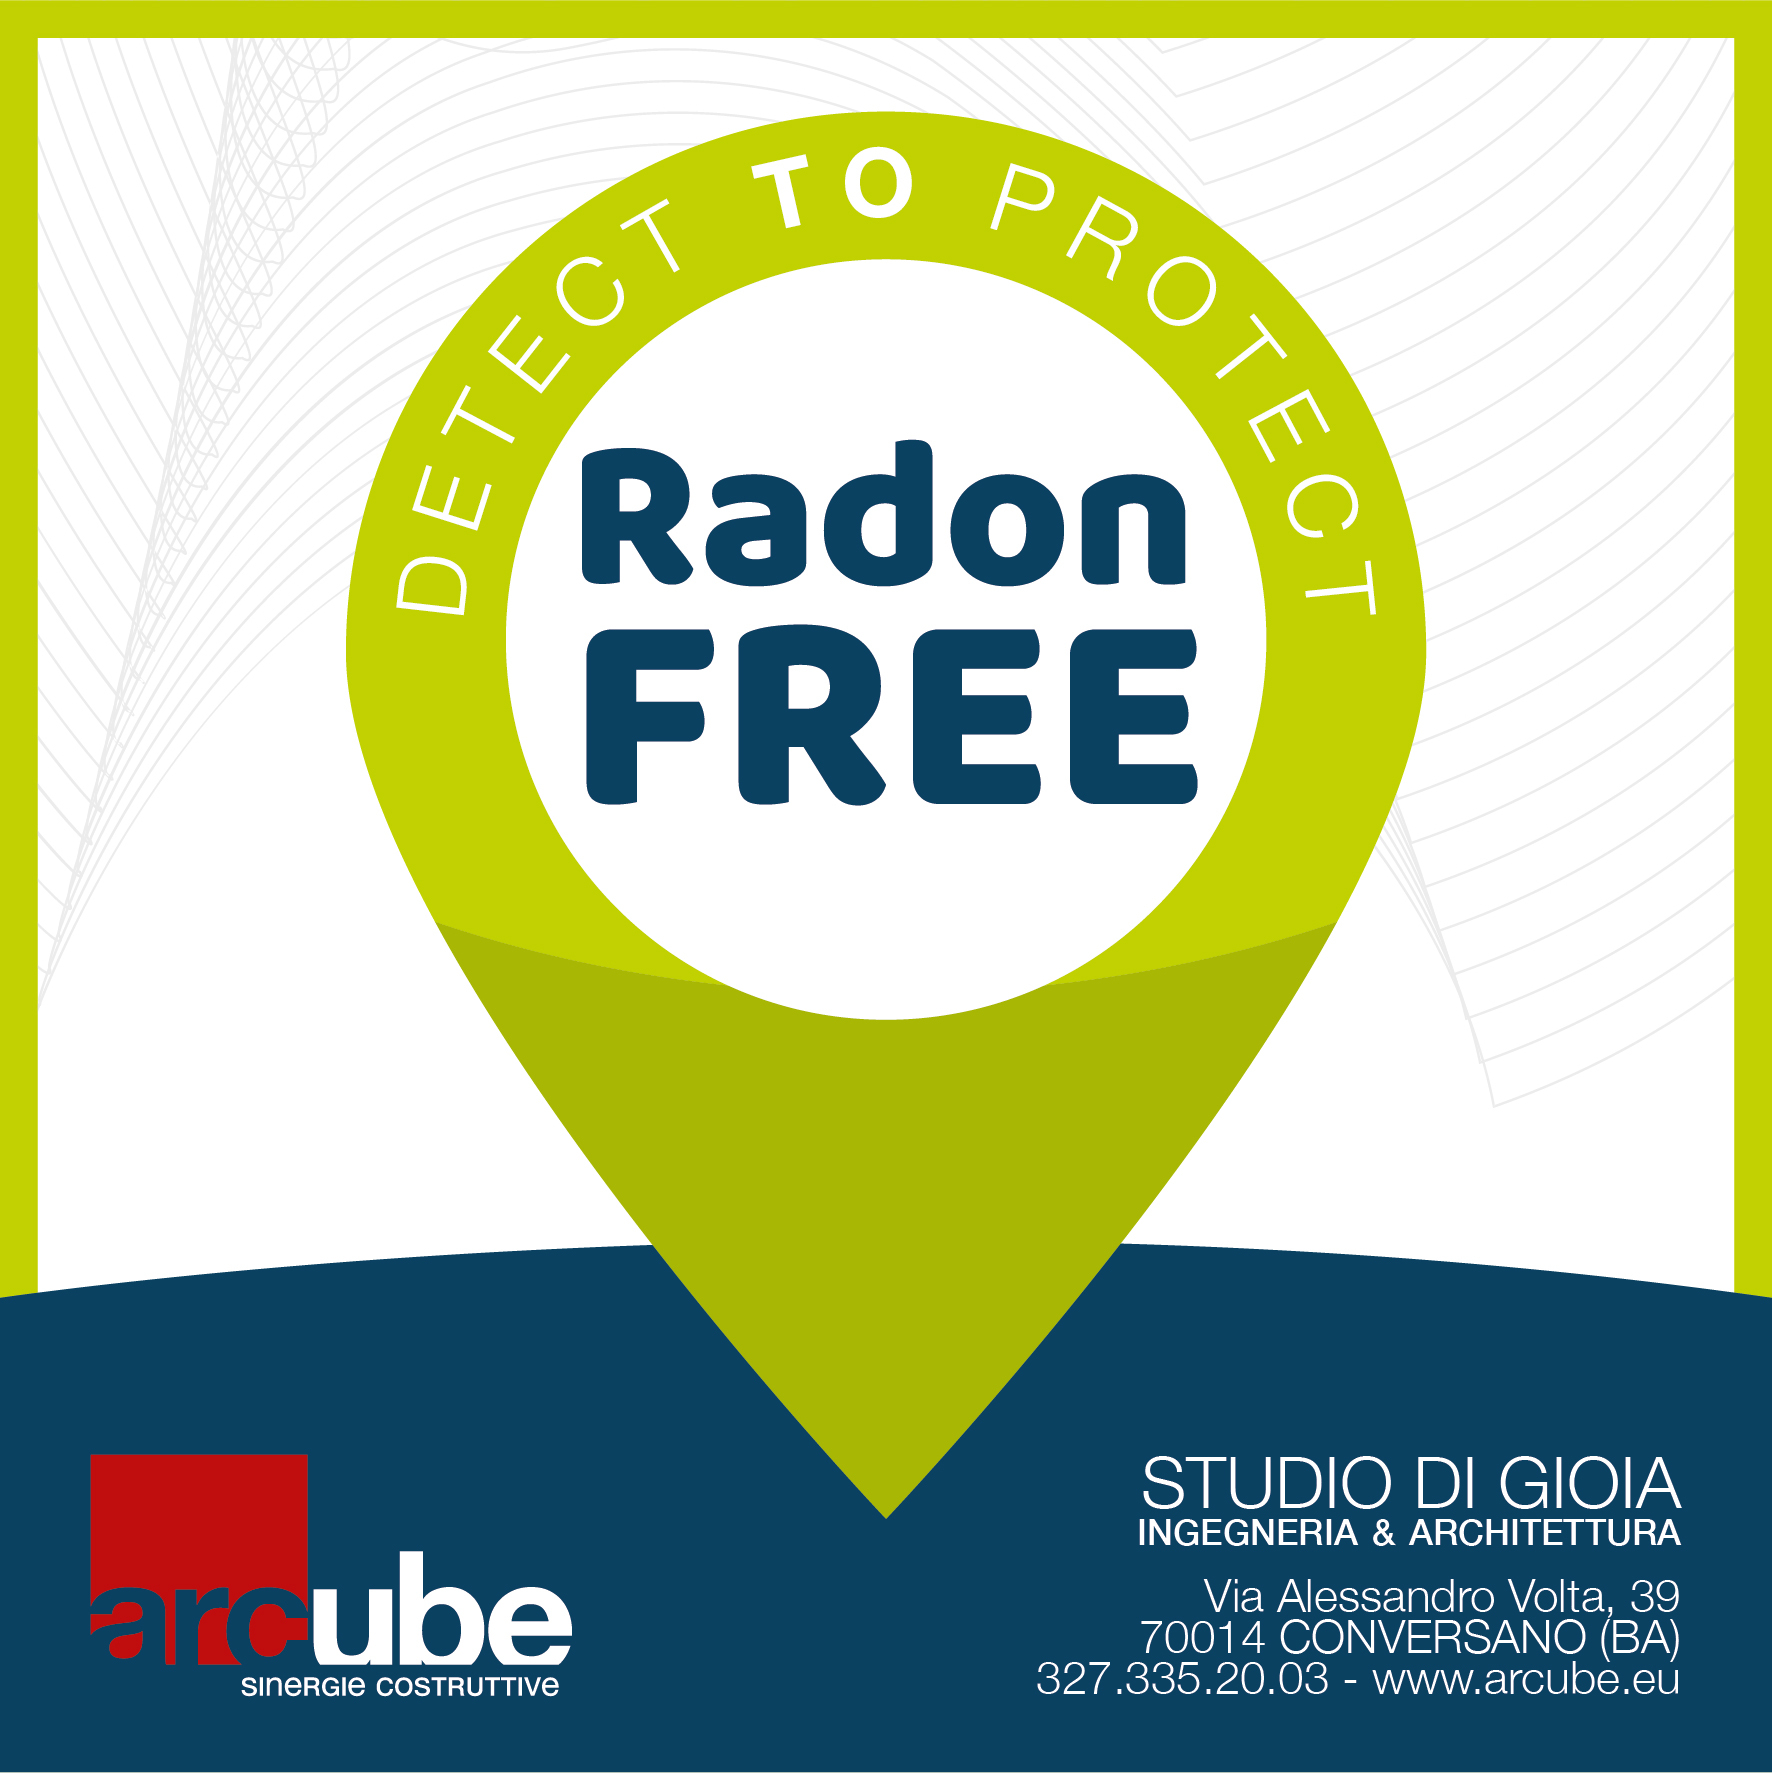 Radon in Puglia